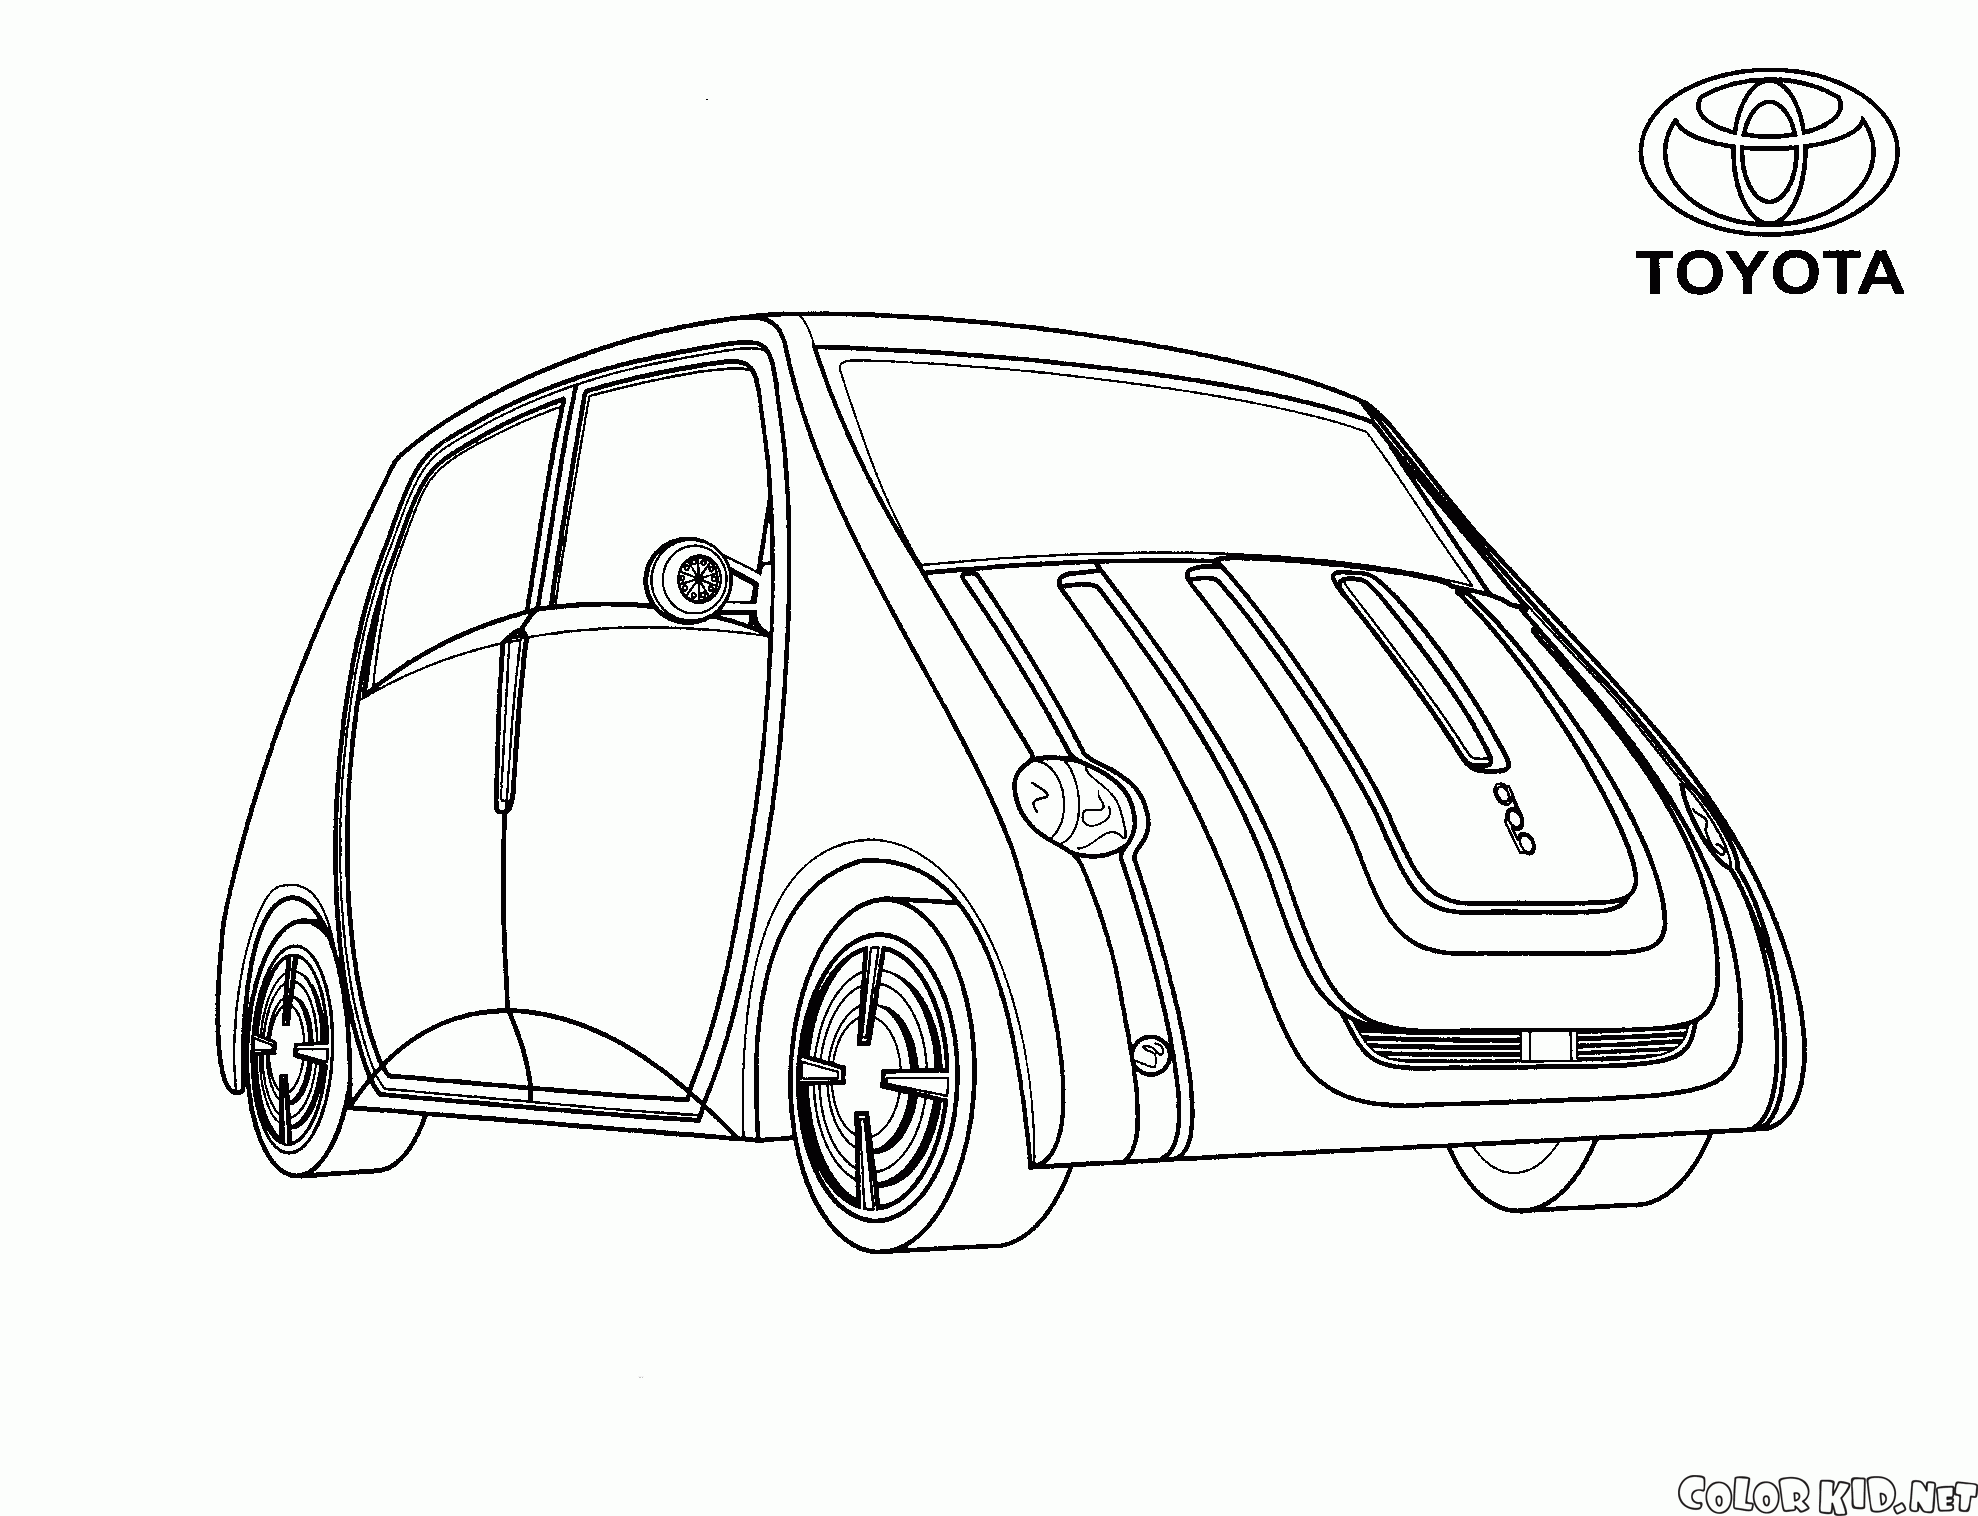 Giapponese mini-van